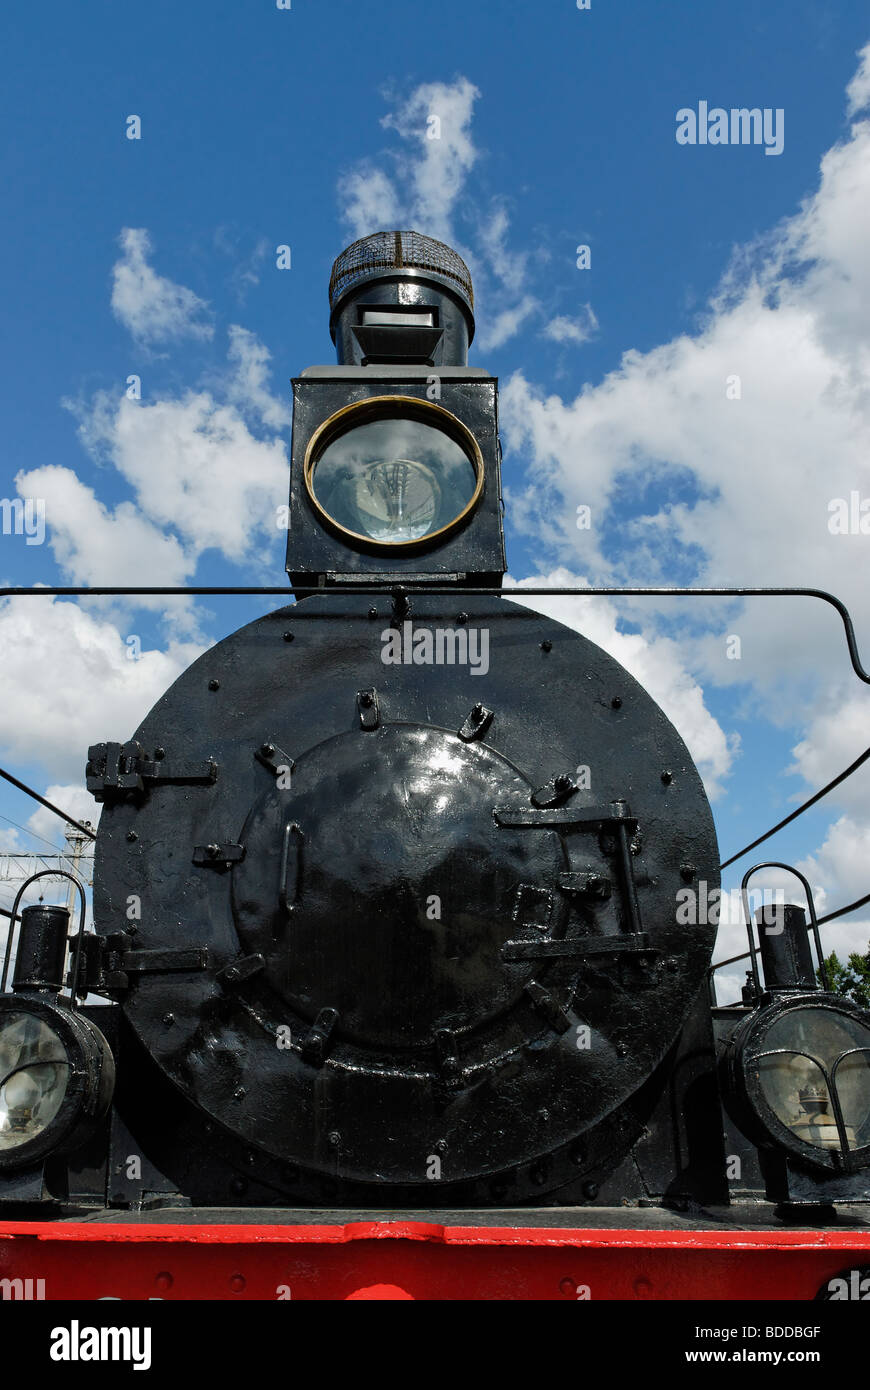 Front view of the retro steam locomotive with kerosene lanterns Stock Photo